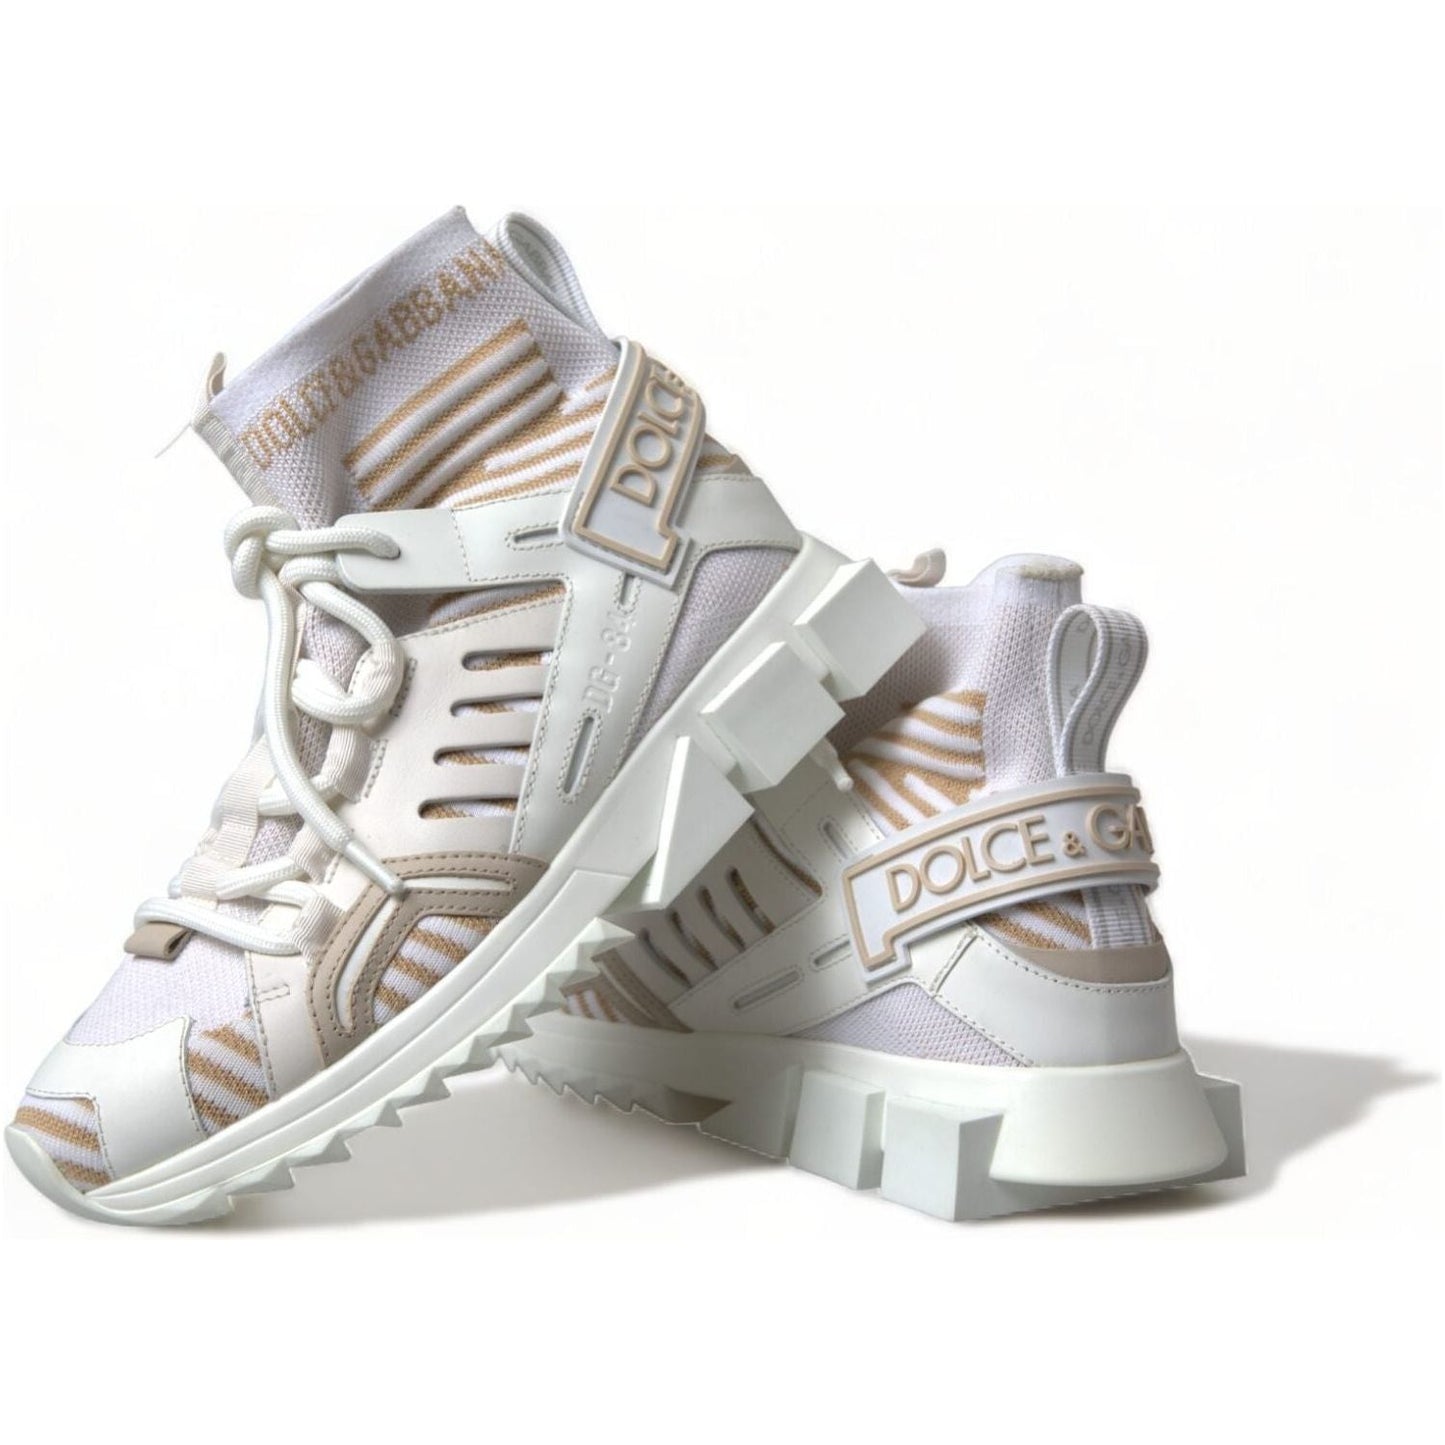 Dolce & Gabbana Elegant Sorrento Slip-On Sneakers white-beige-sorrento-socks-sneakers-shoes 465A2048-BG-scaled-82173a89-fc3.jpg